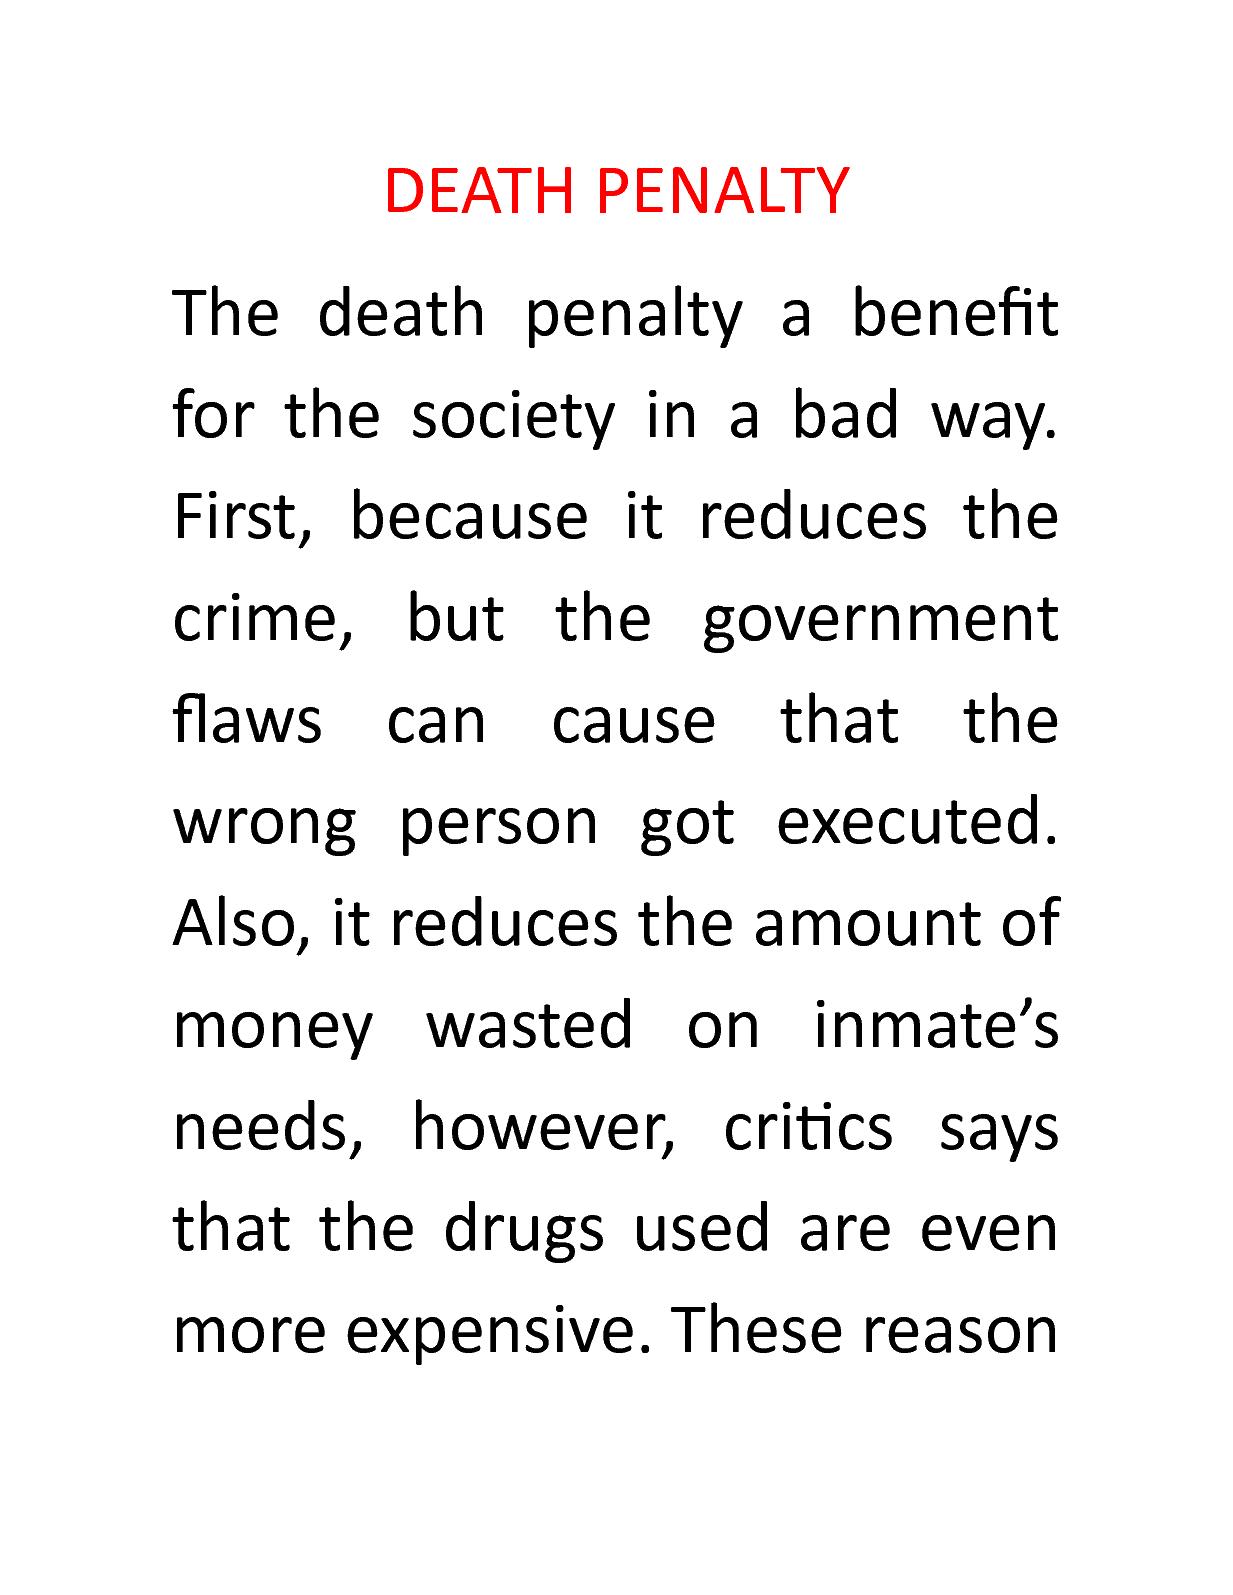 Essays on death penalty